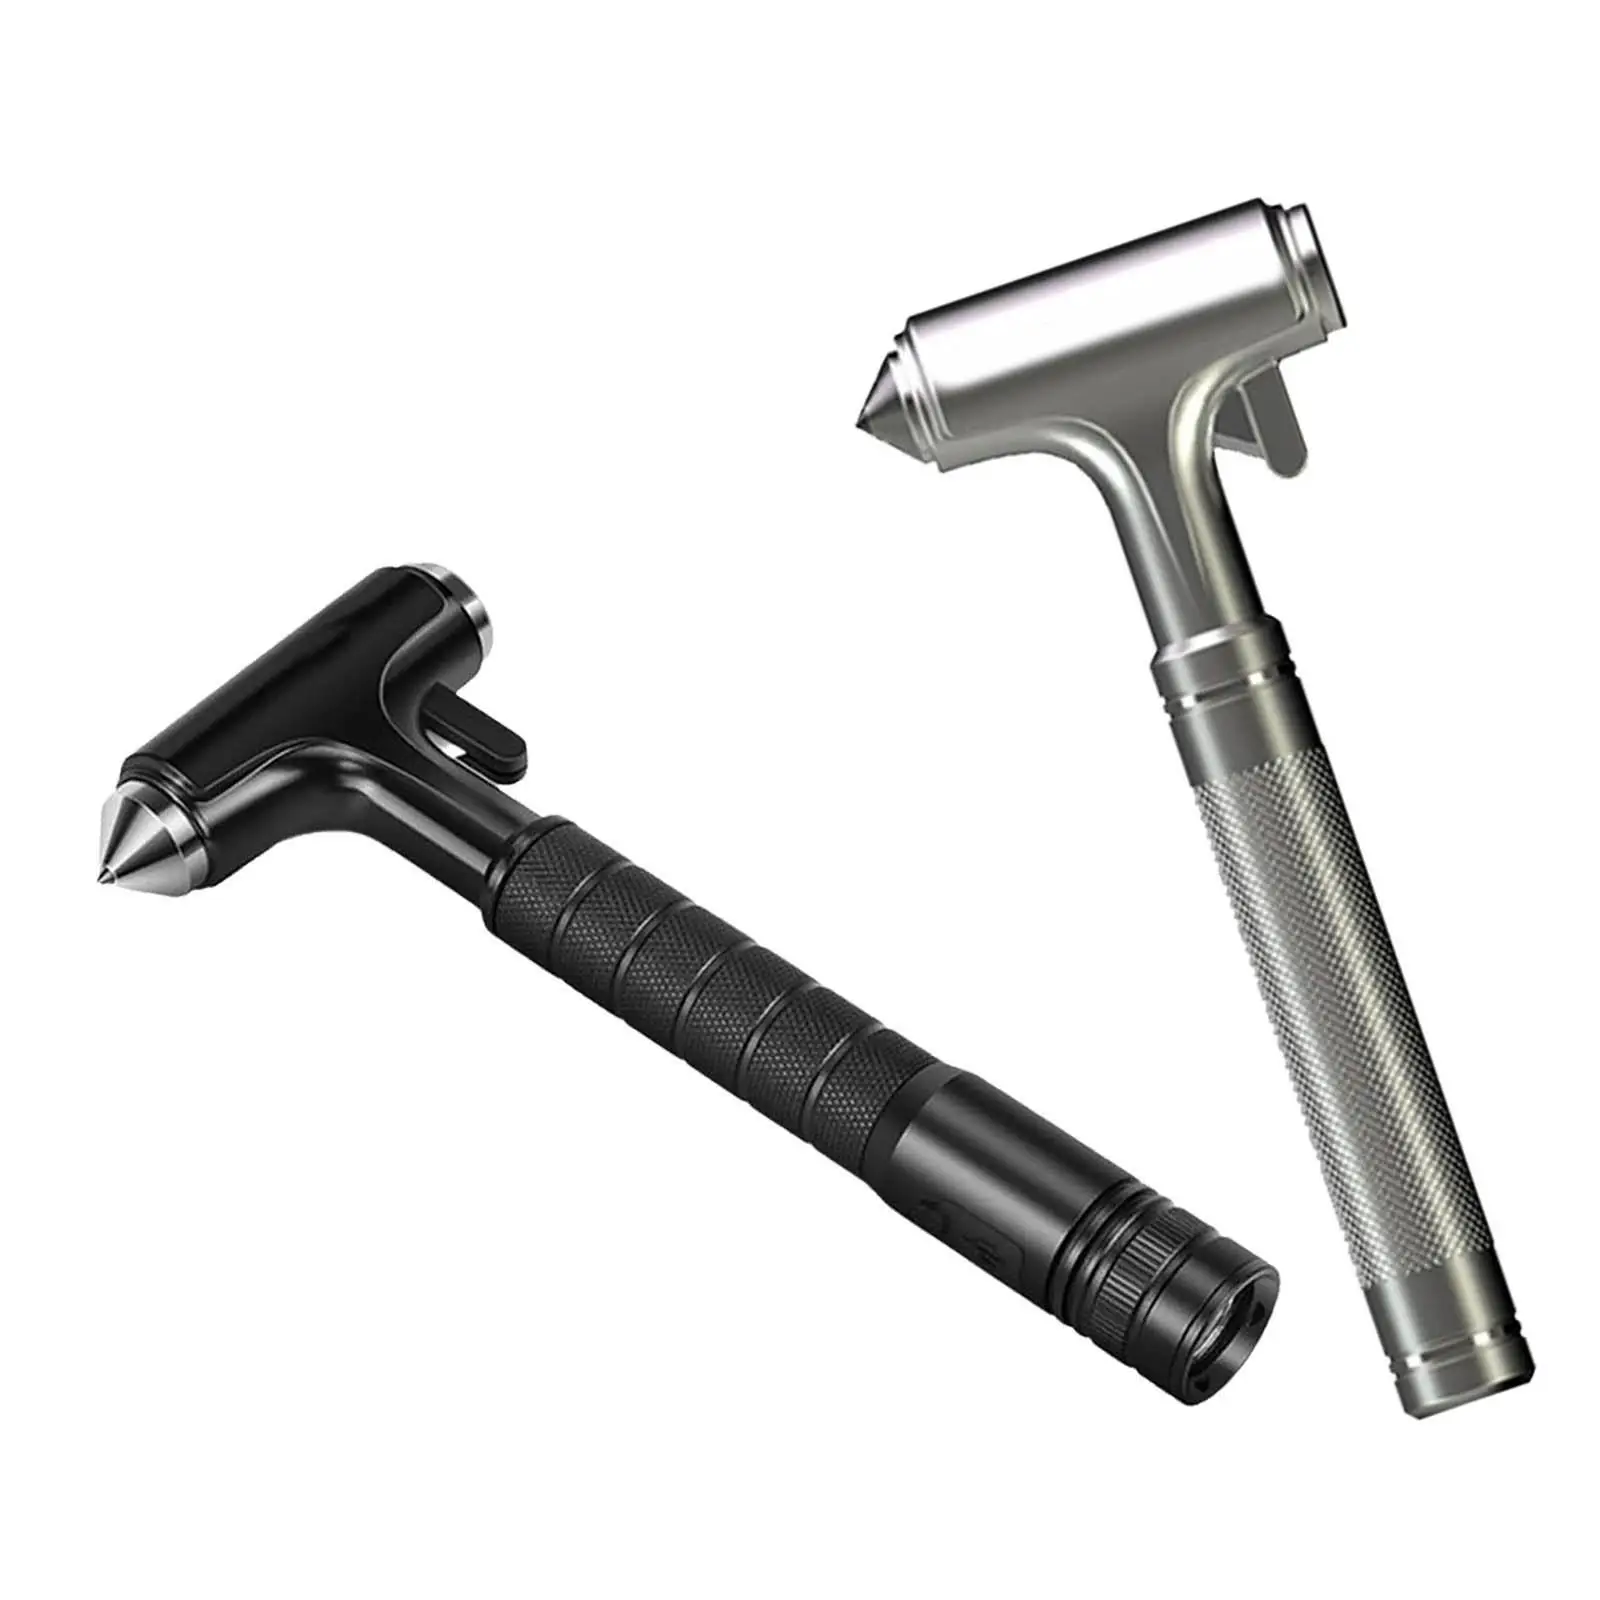 Car Safety Hammer, Glass Breaker Hidden Seatbelt Cutter Self Rescue Tools Life Saving Portable Auto Tungsten Steel Hammer Tip